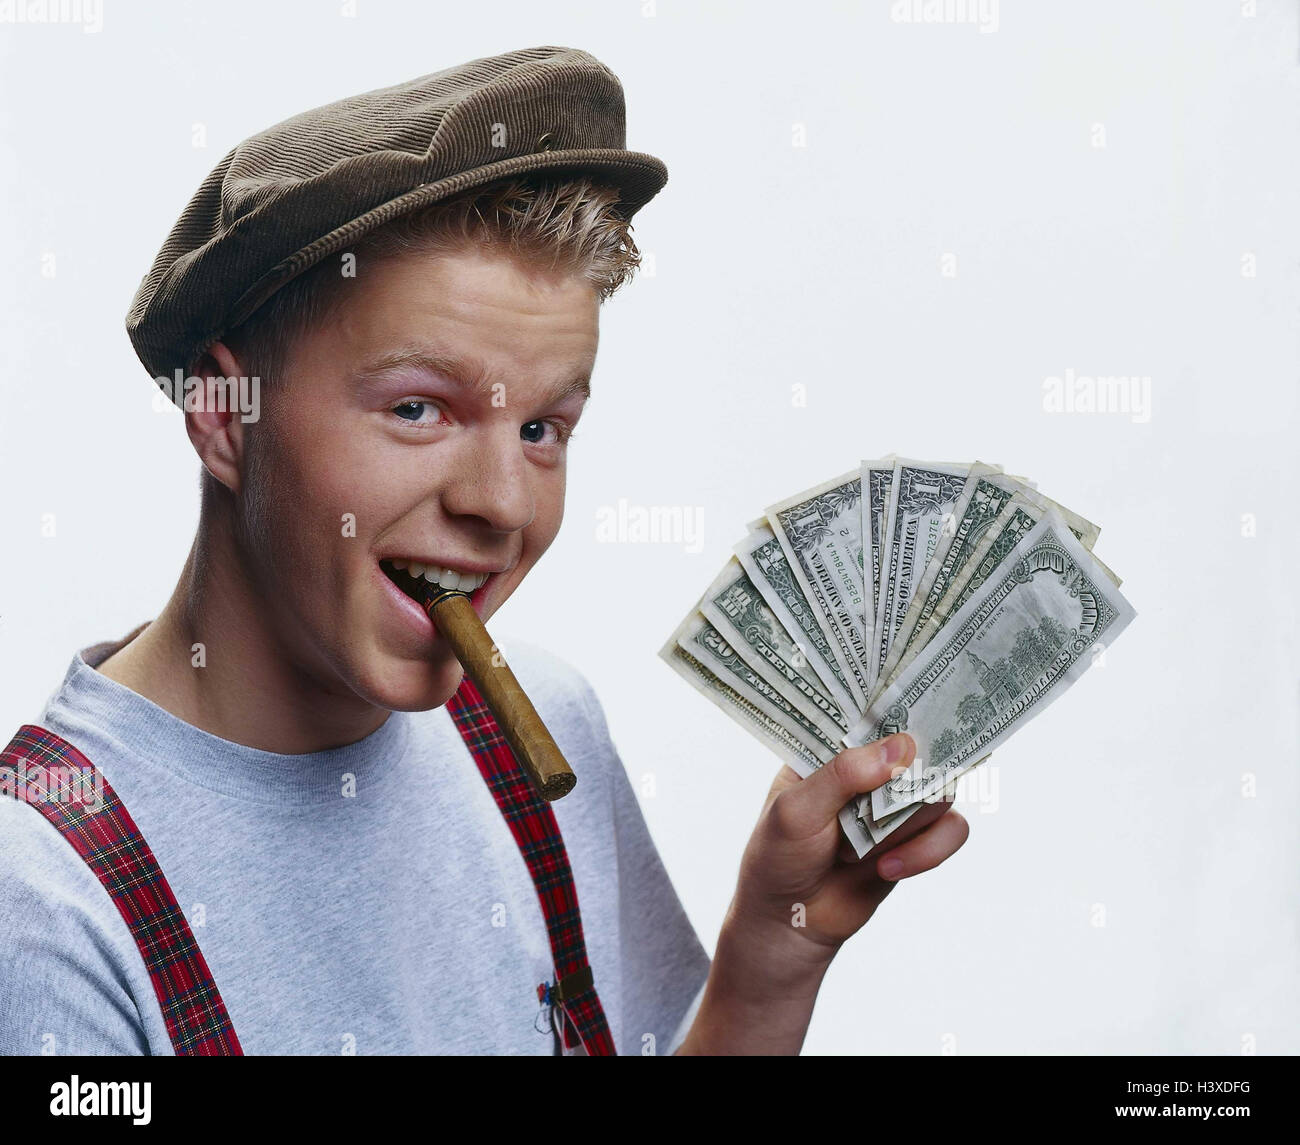 Teenager's boy, sign cap, bank notes, cigar, facial play, portrait